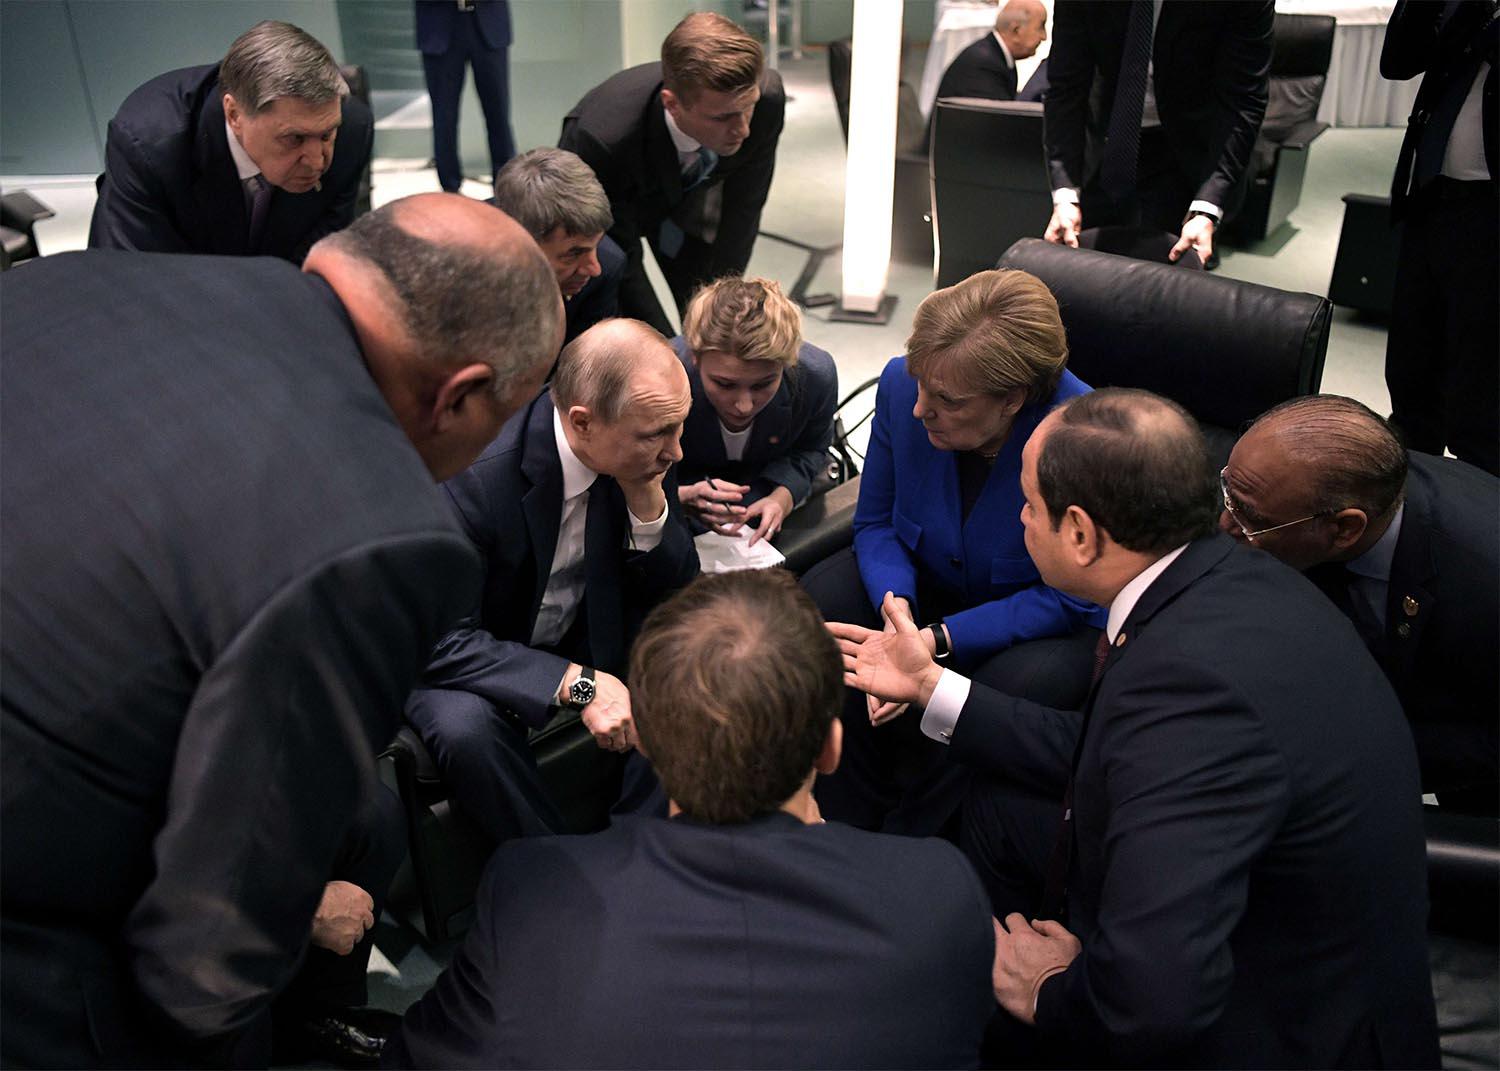 Russia's President Vladimir Putin and German Chancellor Angela Merkel meet on sideline of the Libya summit in Berlin